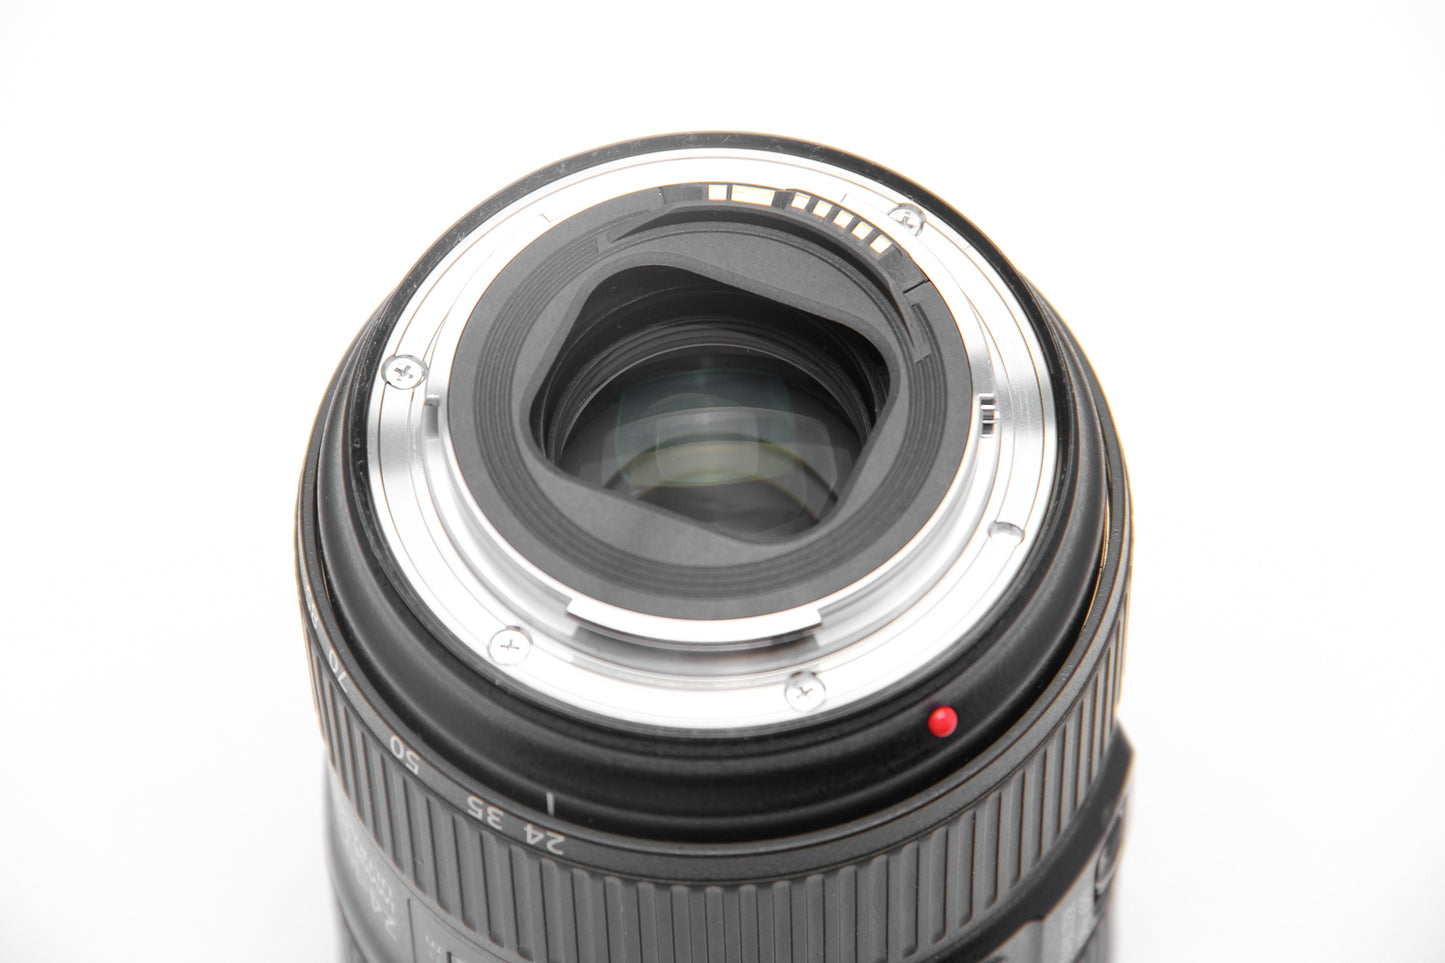 Canon EF 24–105mm f/4L IS II USM Lens